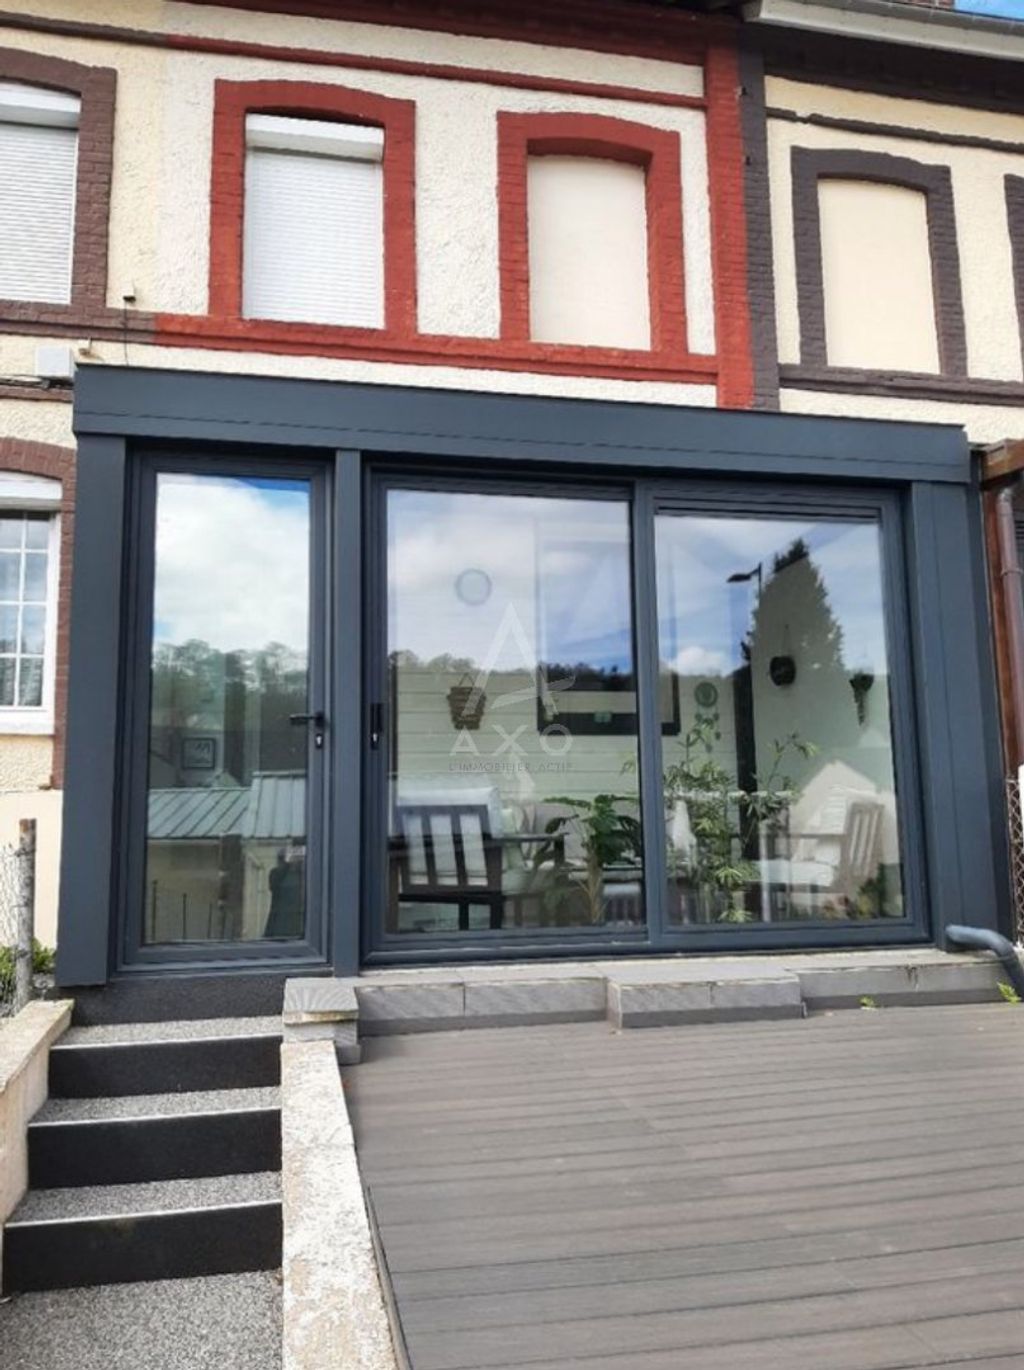 Achat maison à vendre 3 chambres 79 m² - Barentin